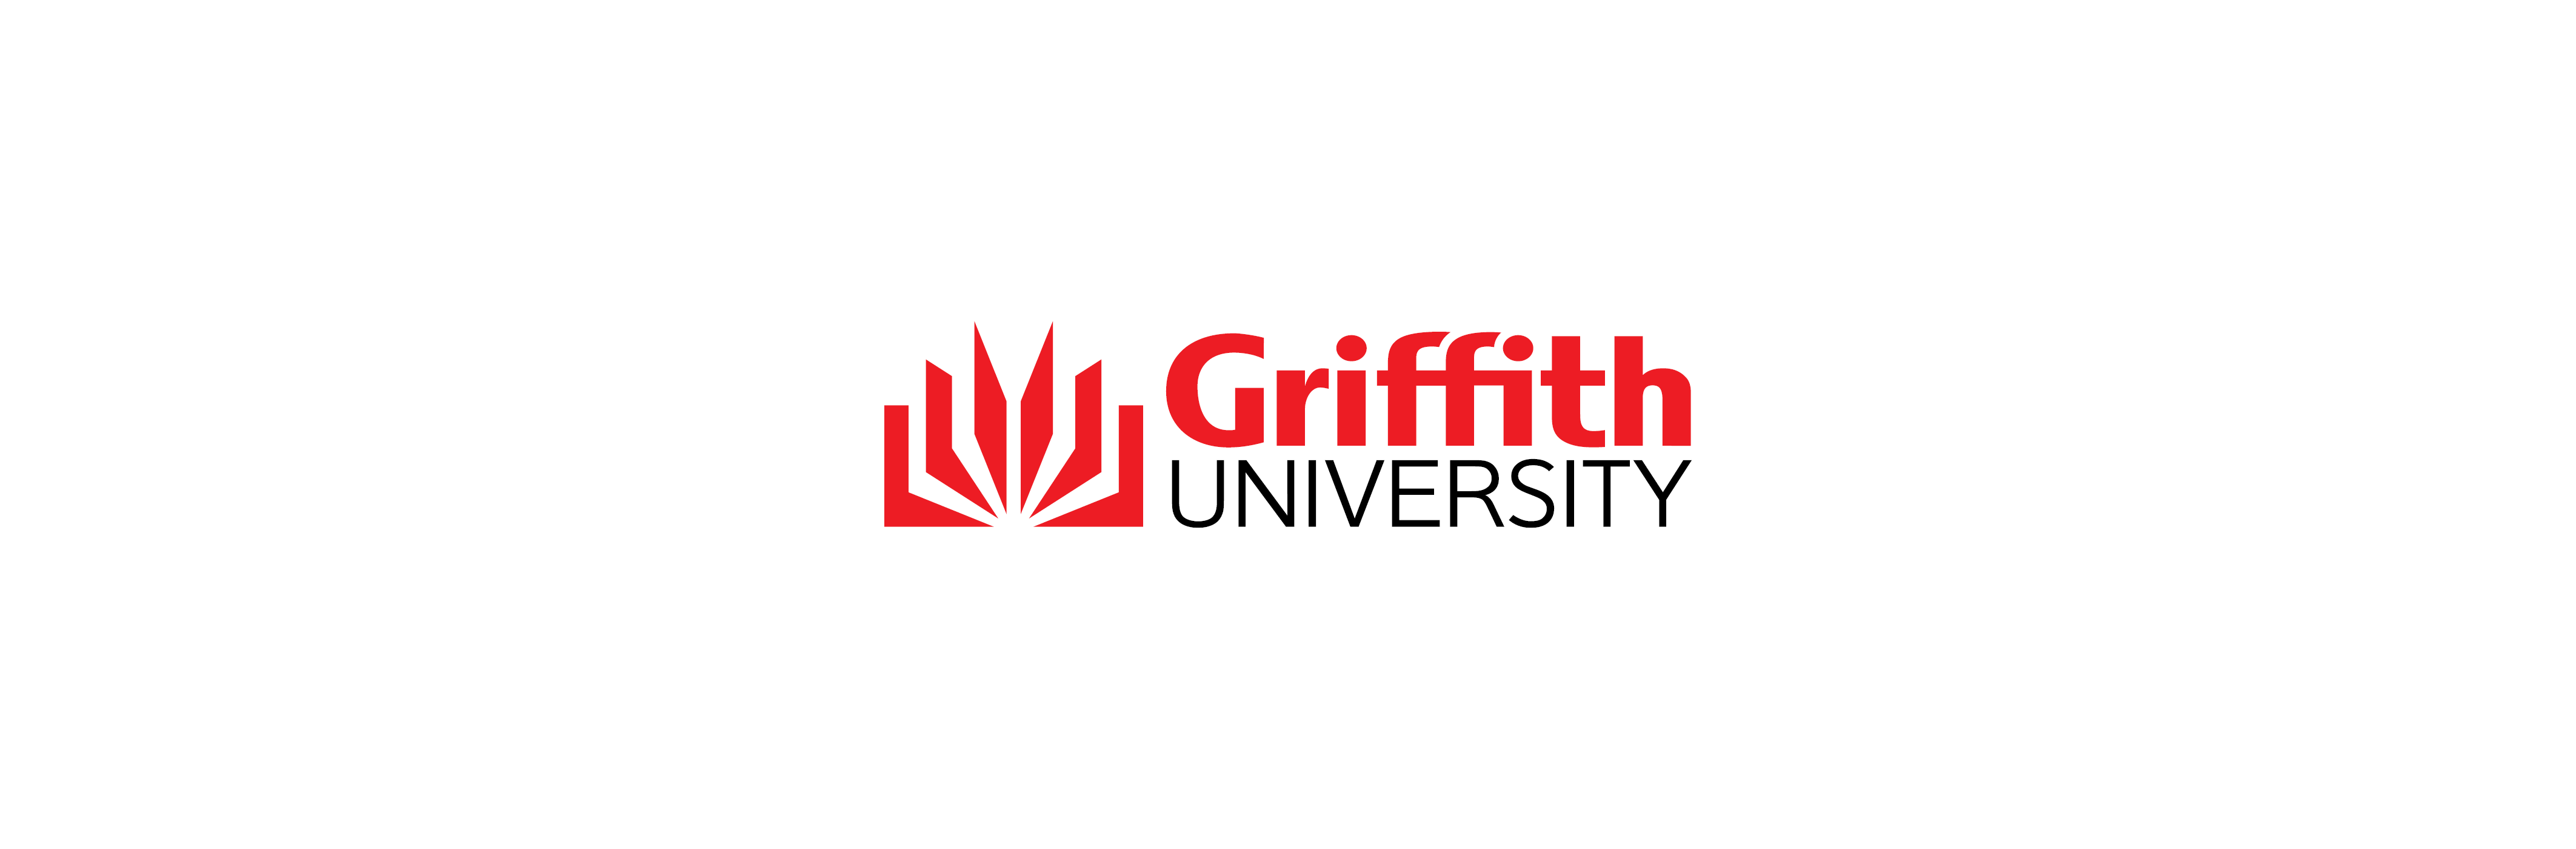 griffith-university-australia-s-lgbtq-inclusive-employers